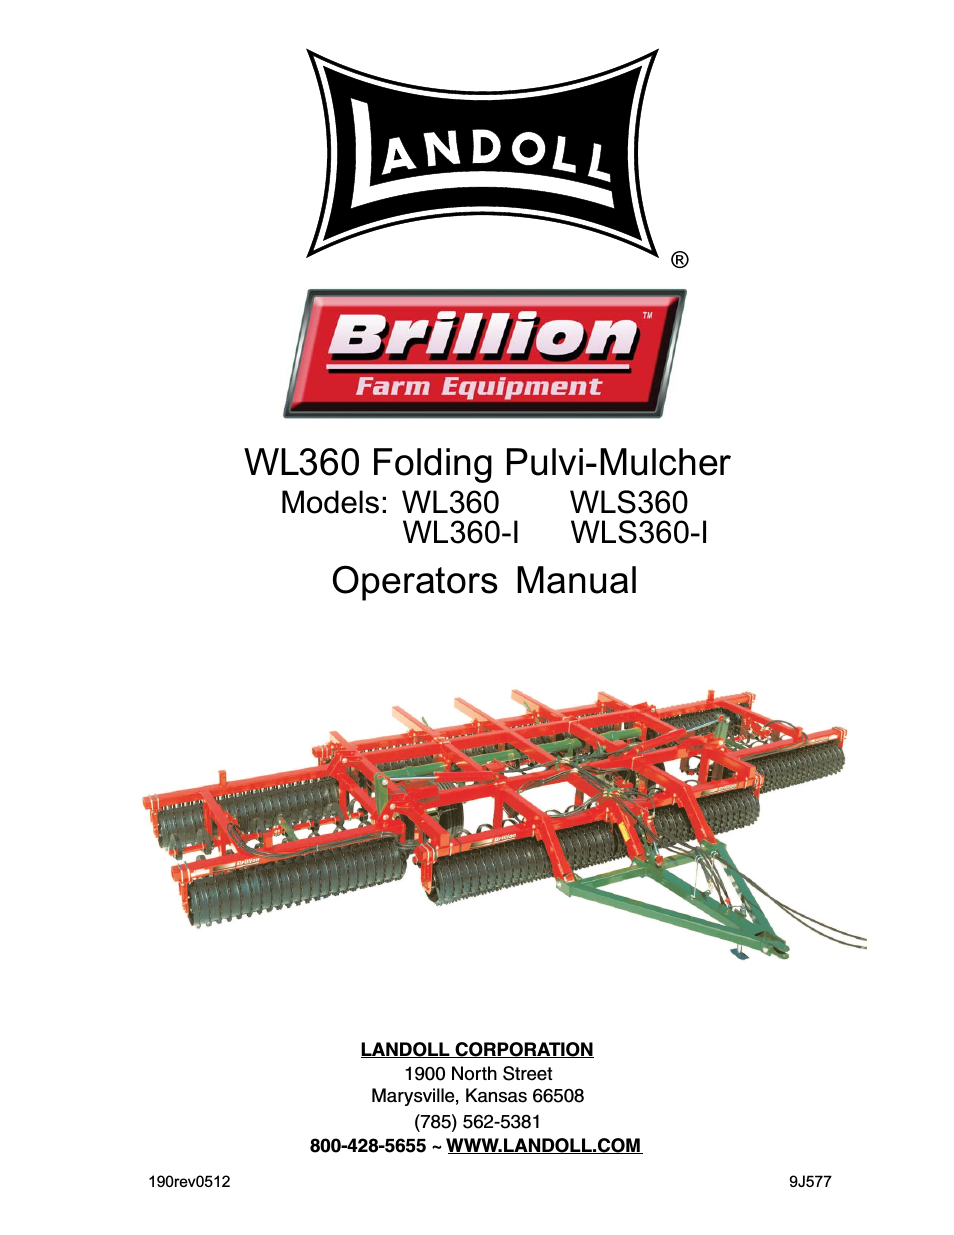 WLS360/WLS360-I Folding Pulvi-Mulcher